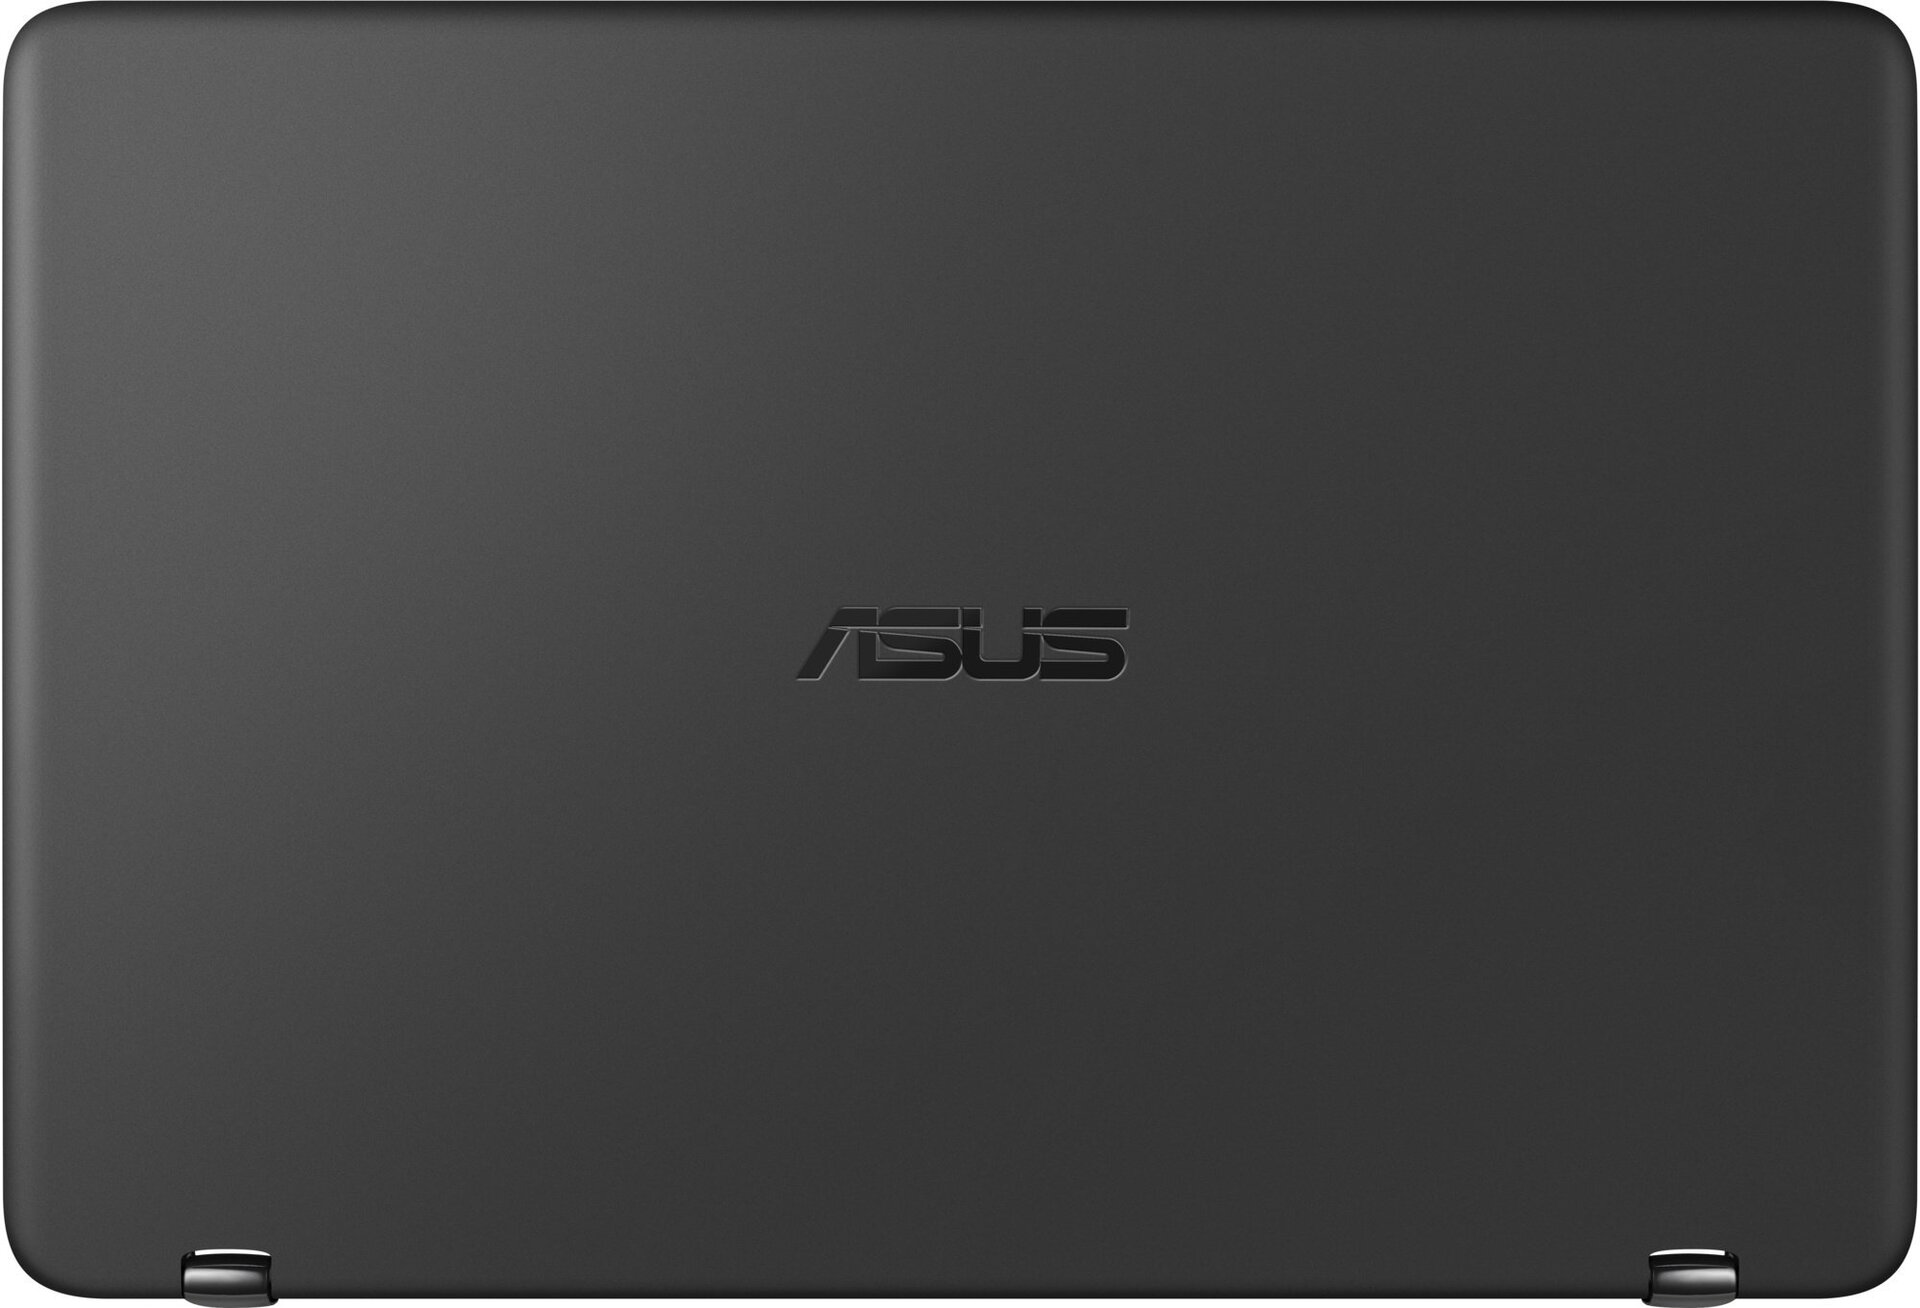 ASUS ZenBook Flip UX360UAK 